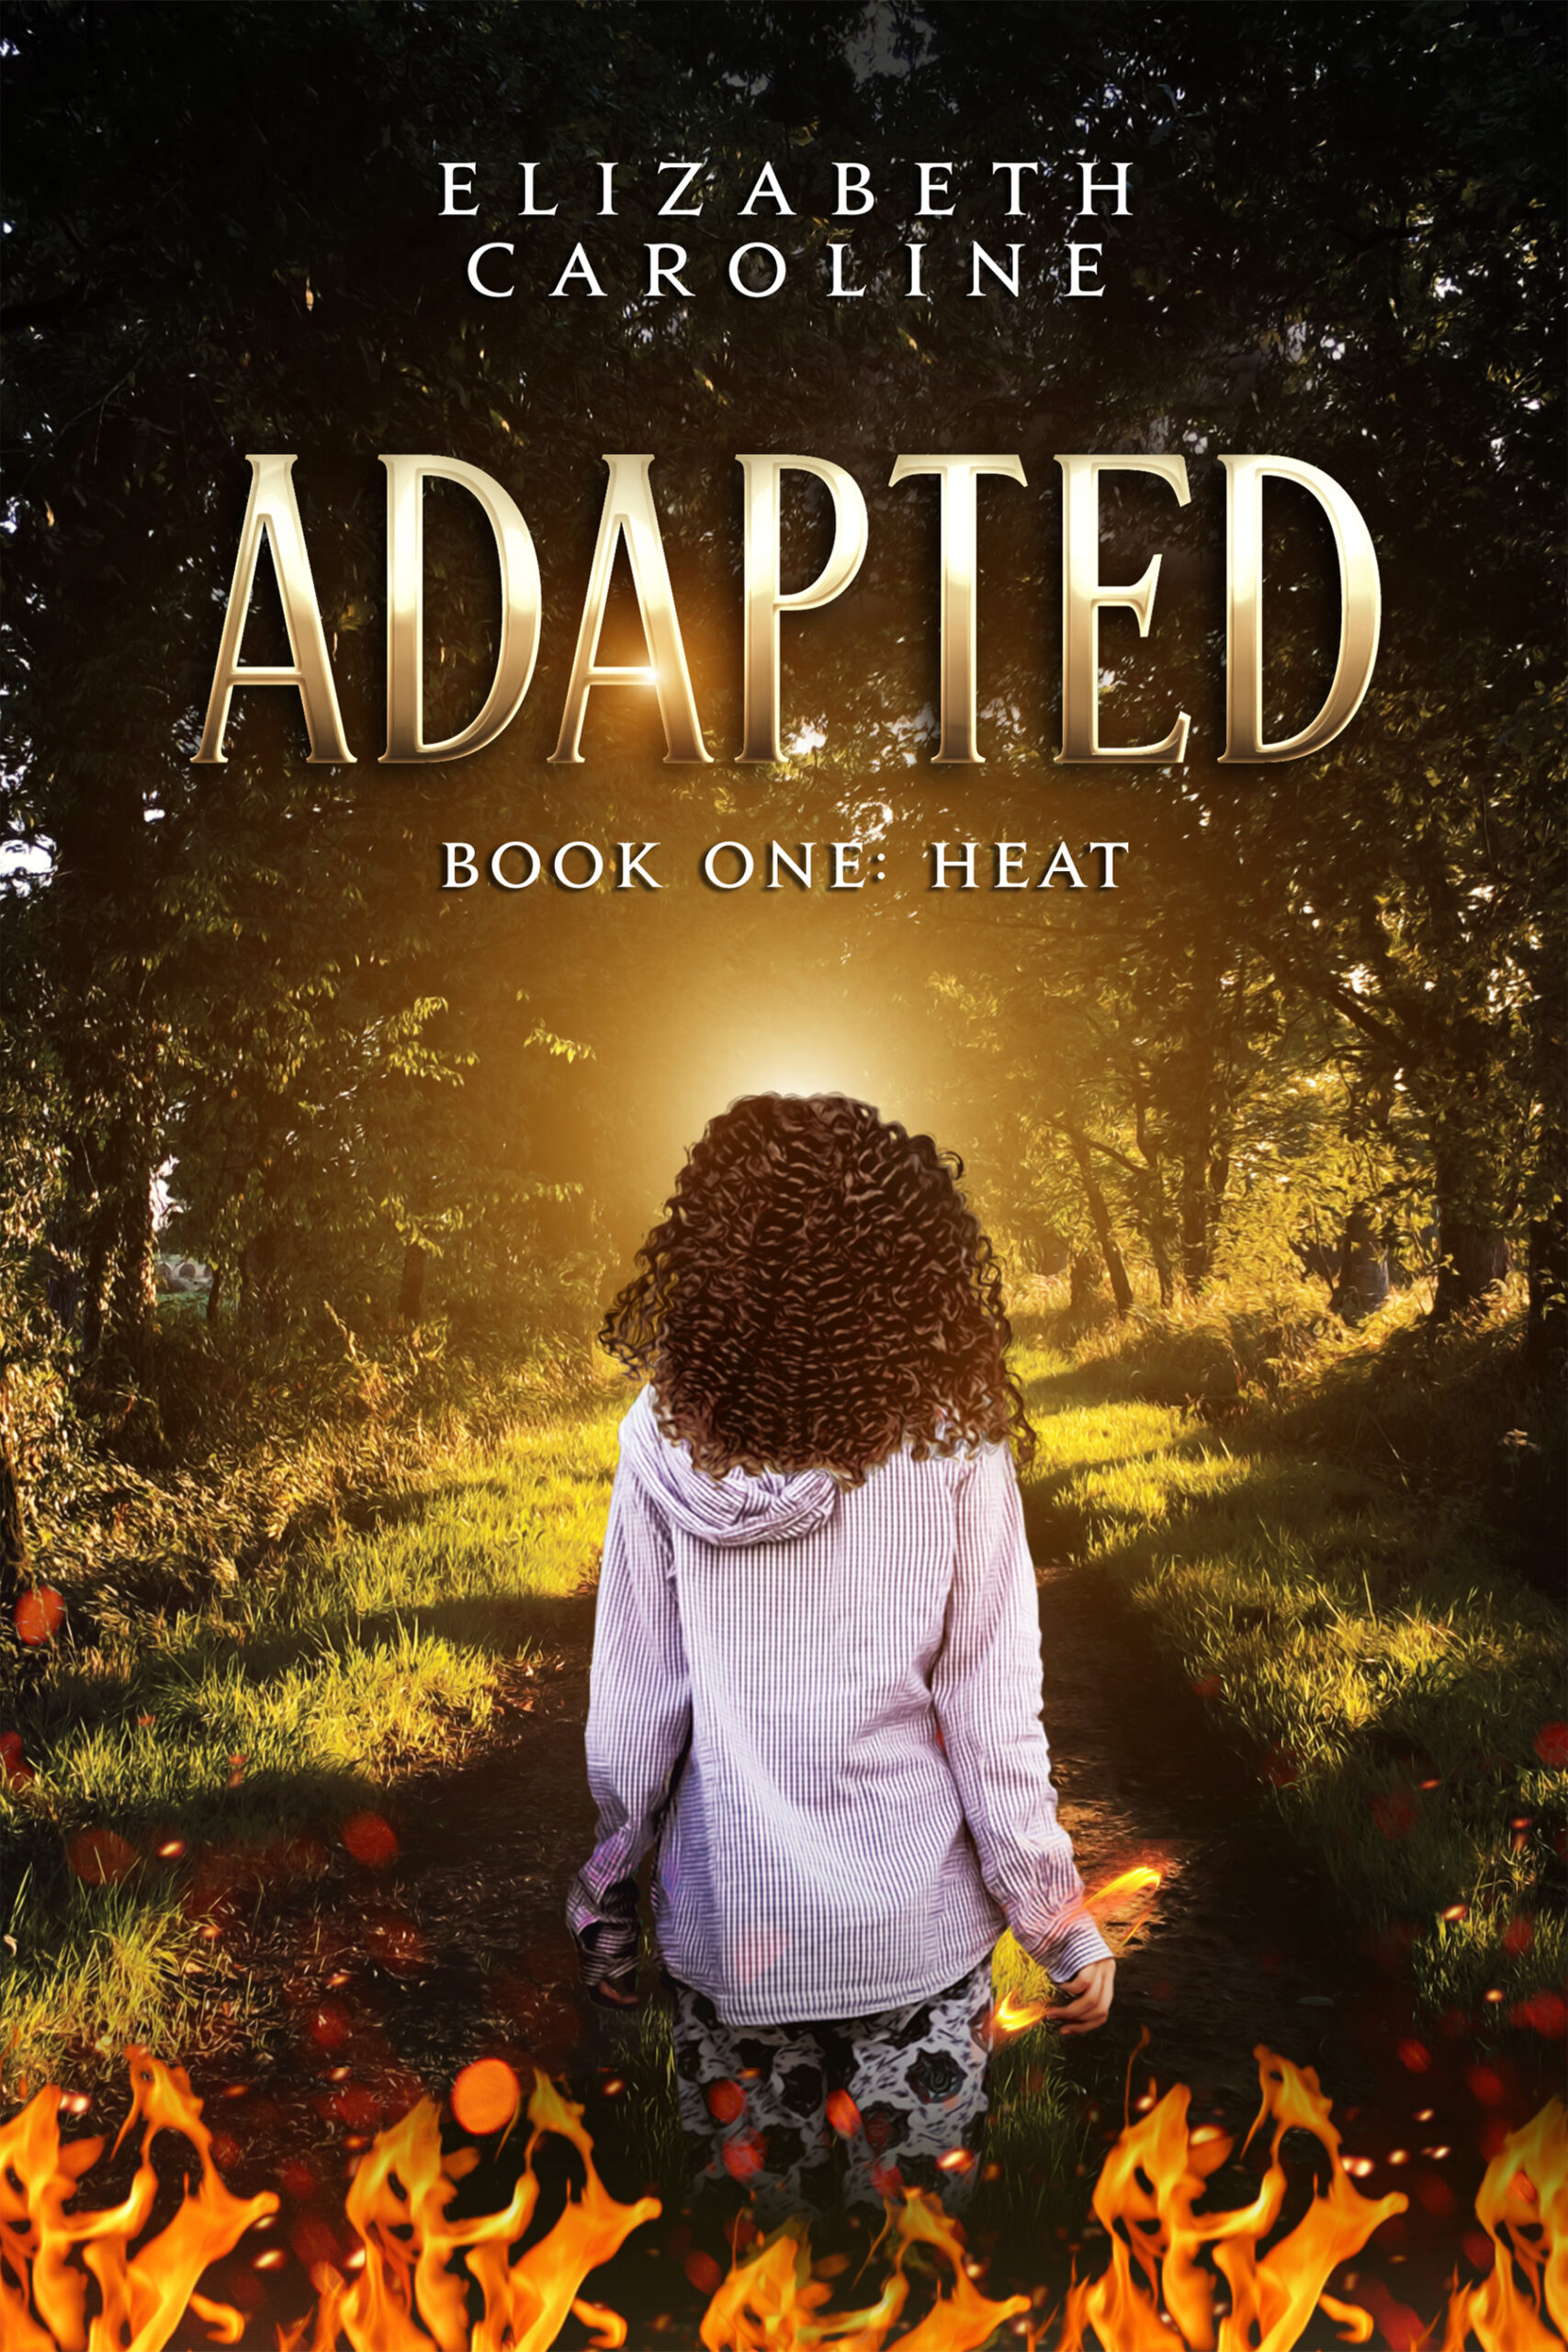 FREE: Adapted, Book One: Heat by Elizabeth Caroline